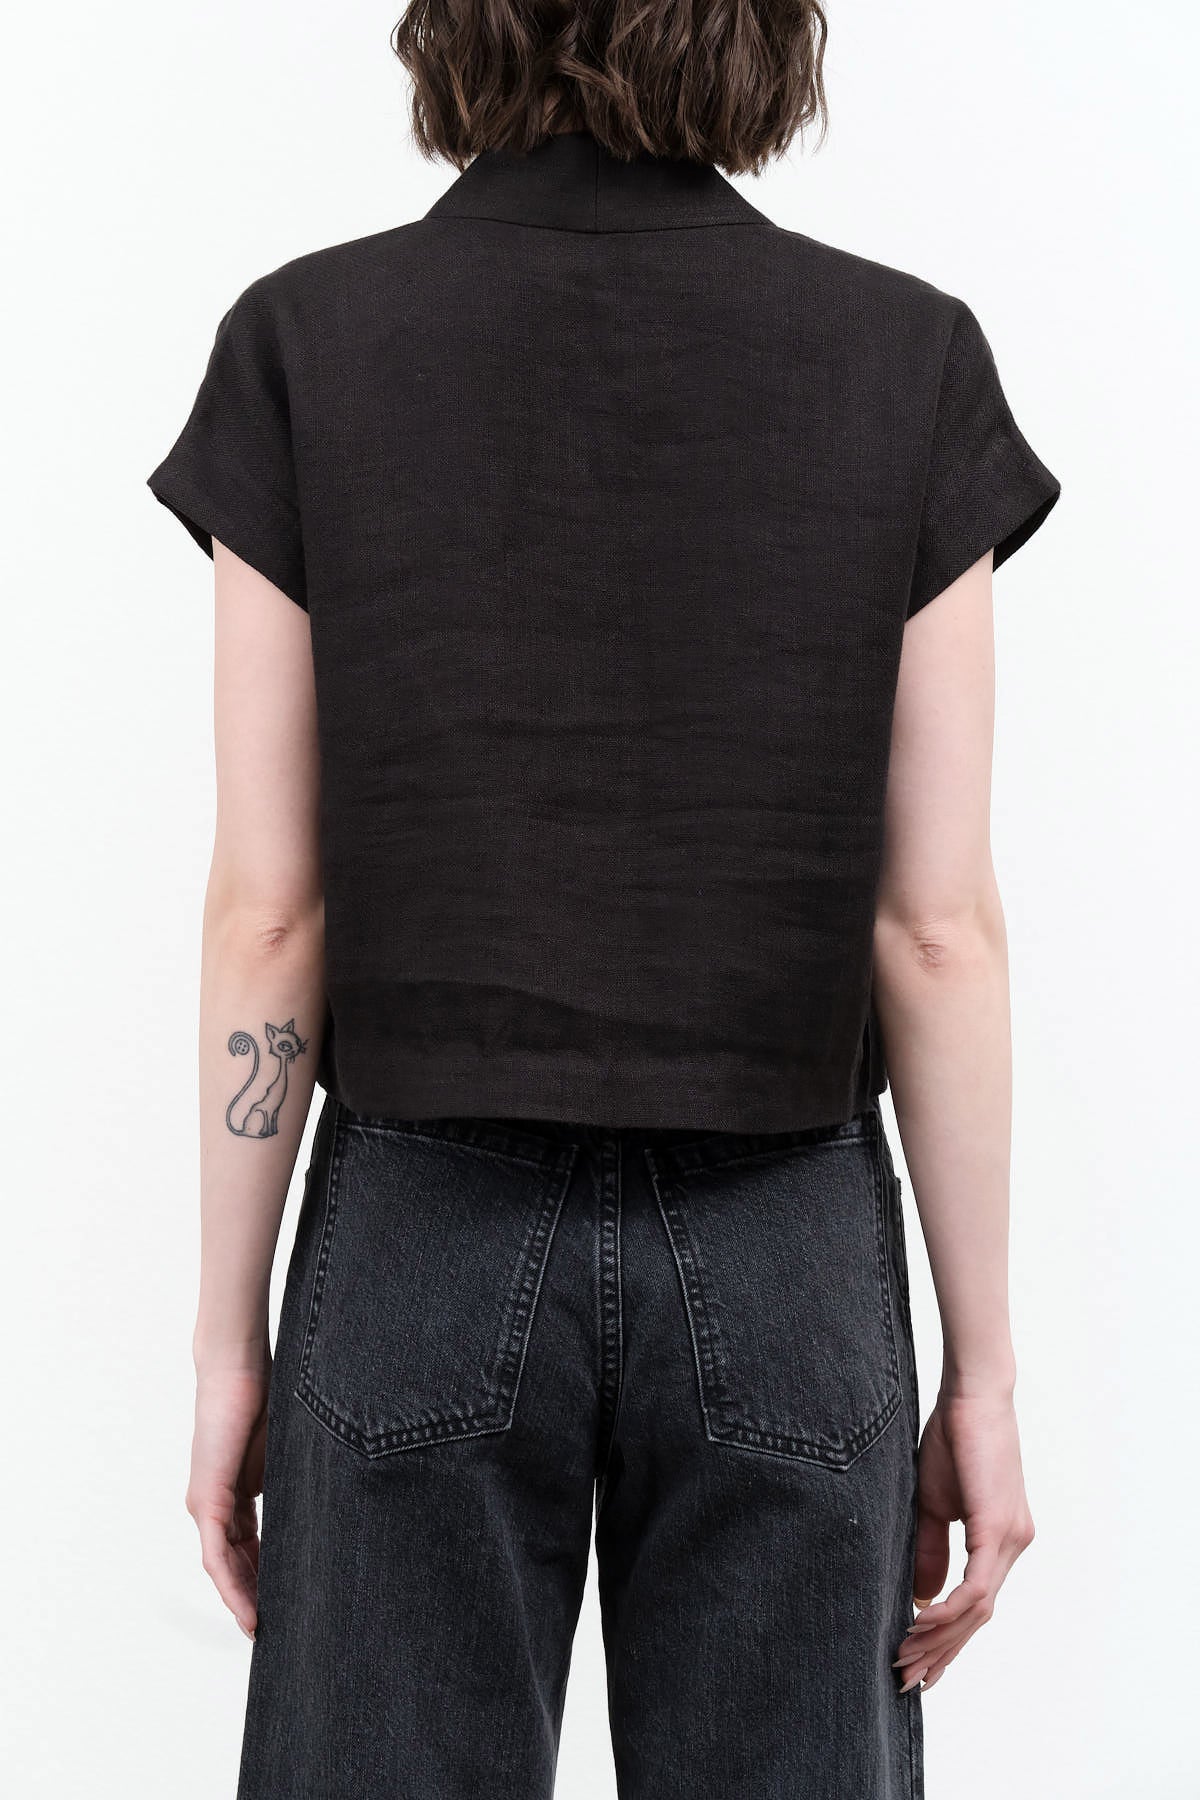 Black V-Neck Short Sleeve Top by 7115 by Szeki